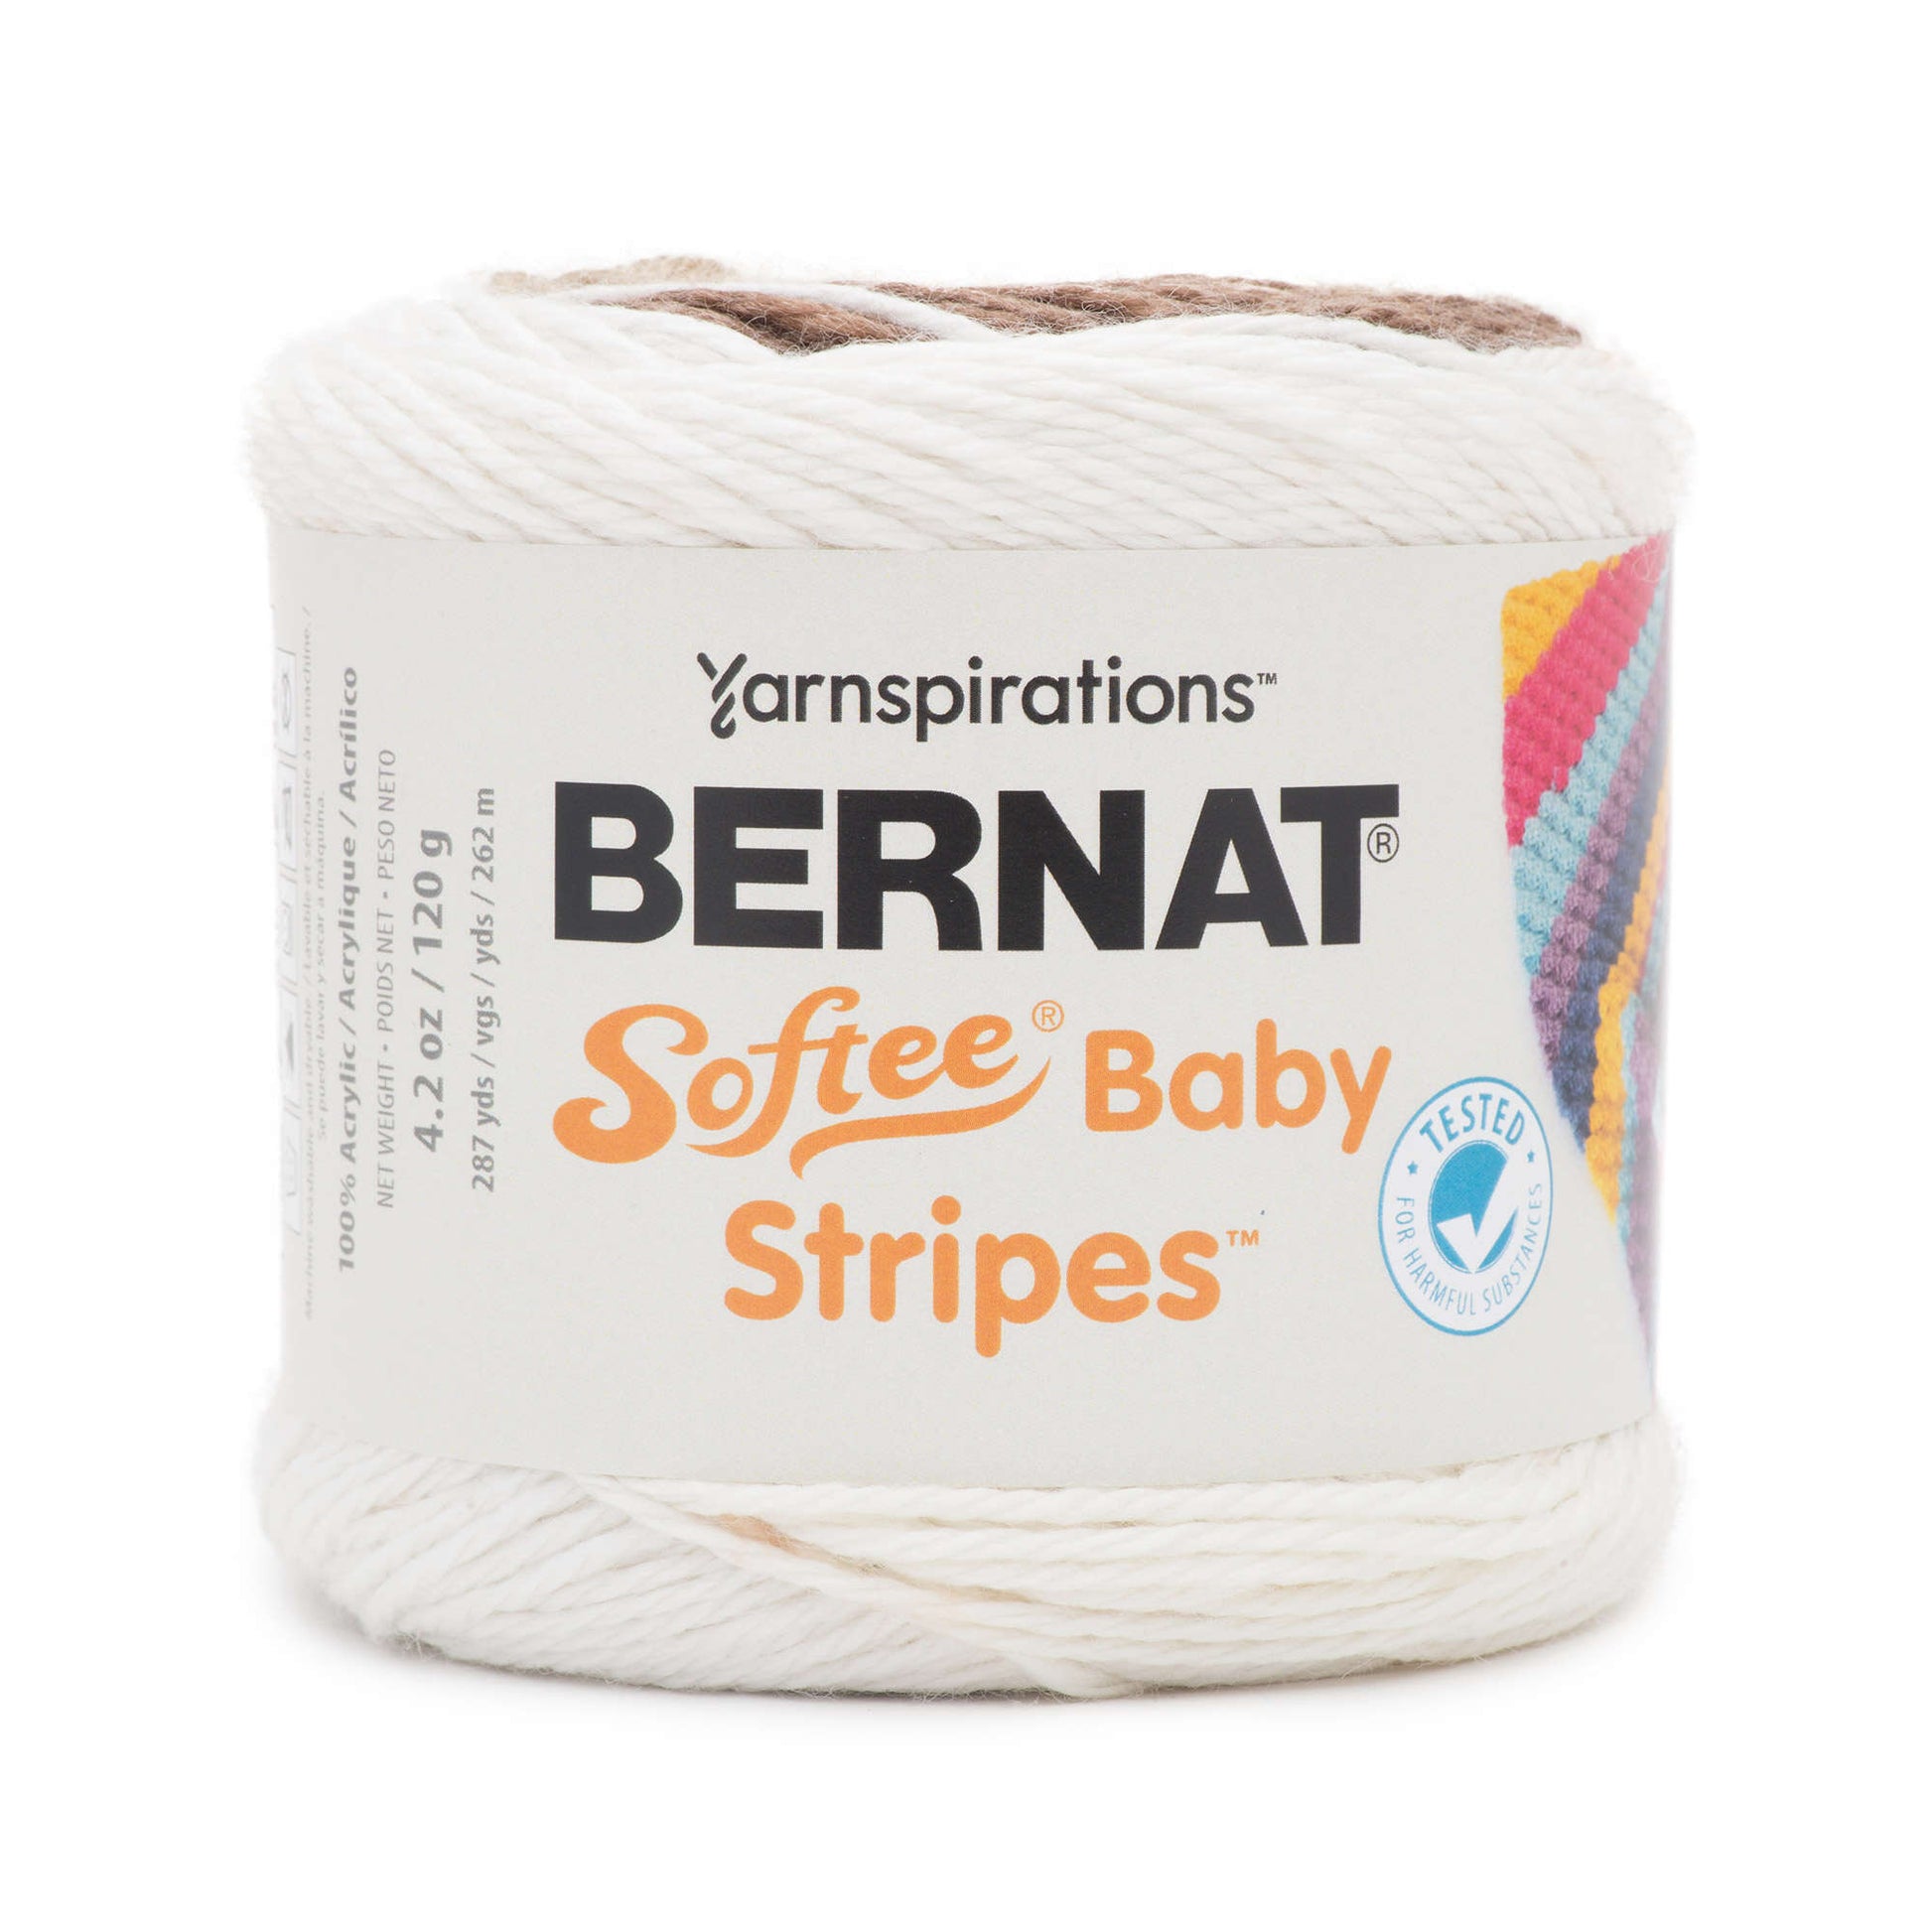 Bernat Softee Baby Stripes Yarn - Discontinued